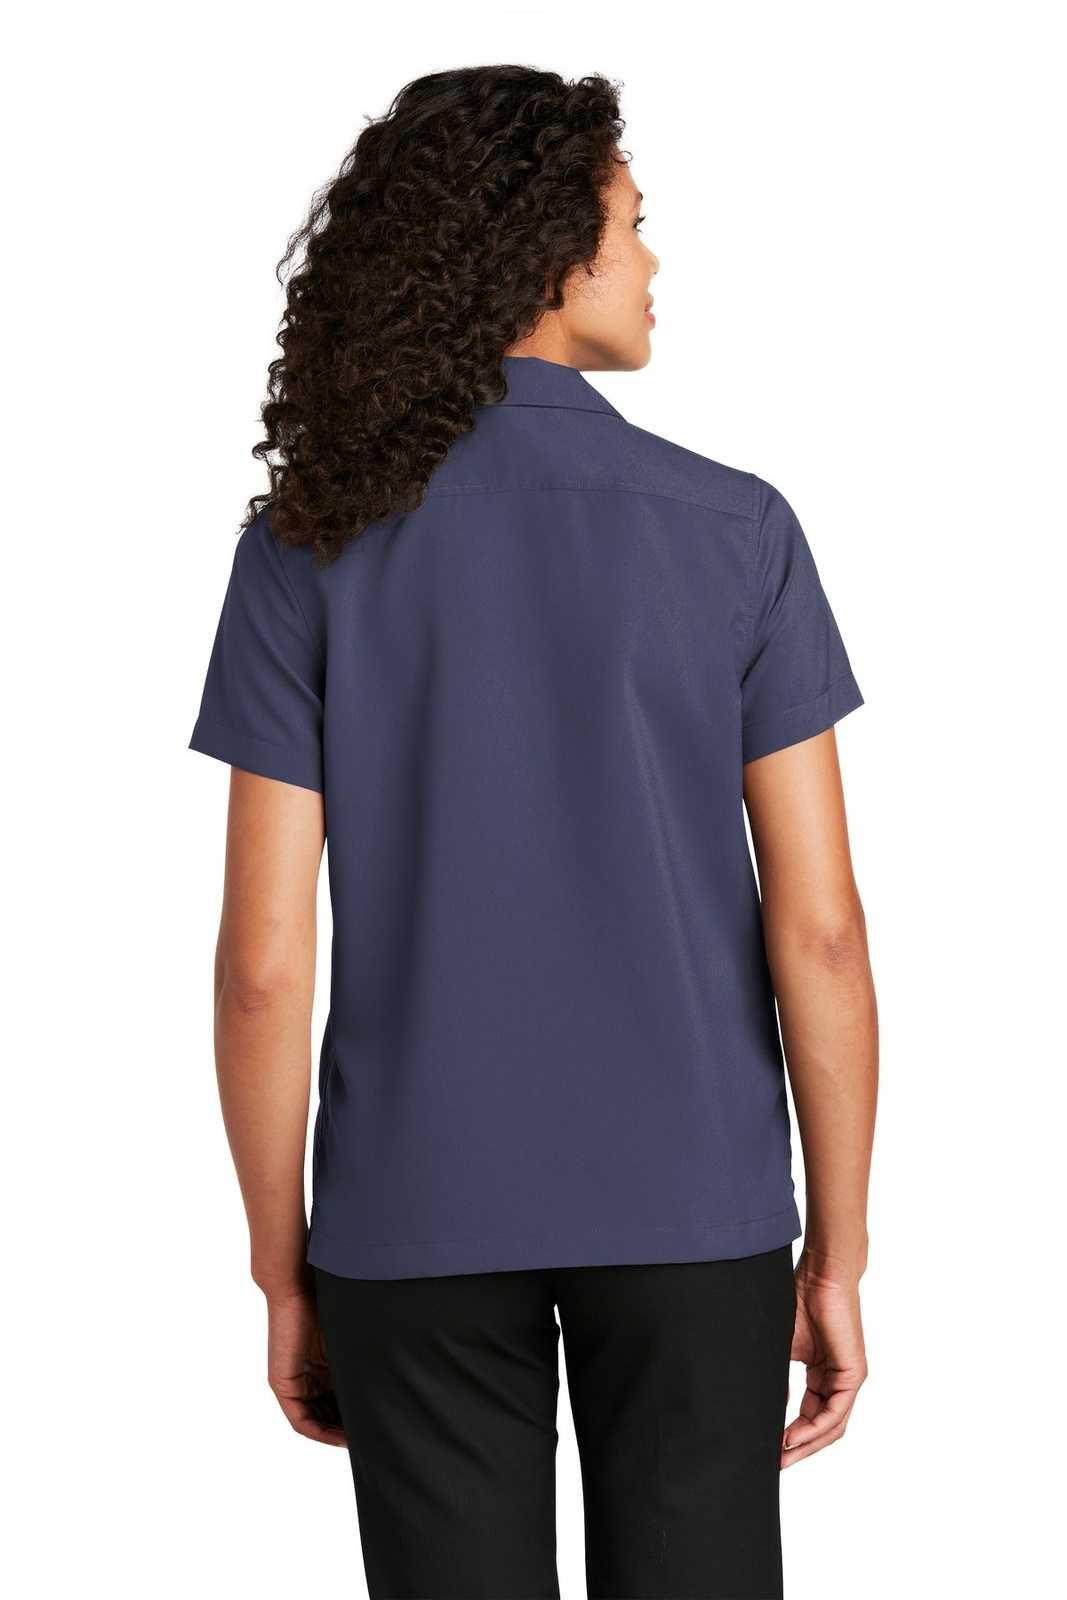 Port Authority LW400 Ladies Short Sleeve Performance Staff Shirt - True Navy - HIT a Double - 2